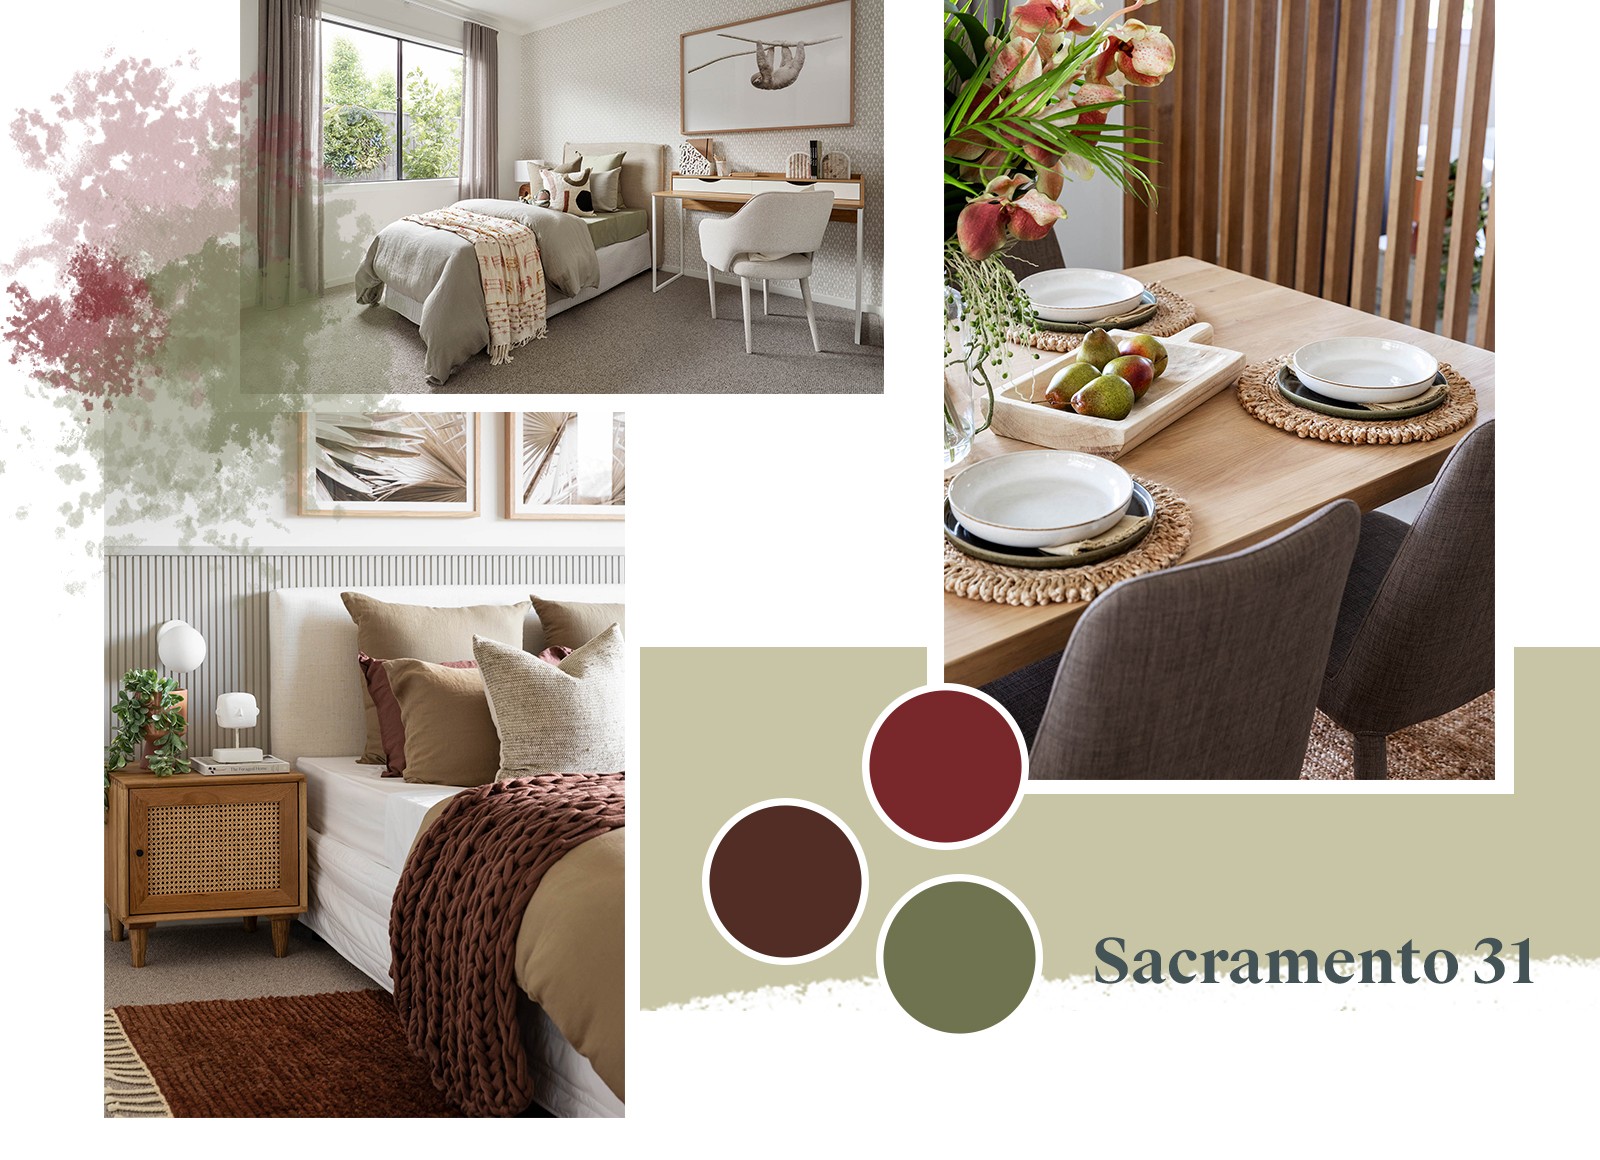 Sacramento 31: A Single-Level Home with Space Galore!